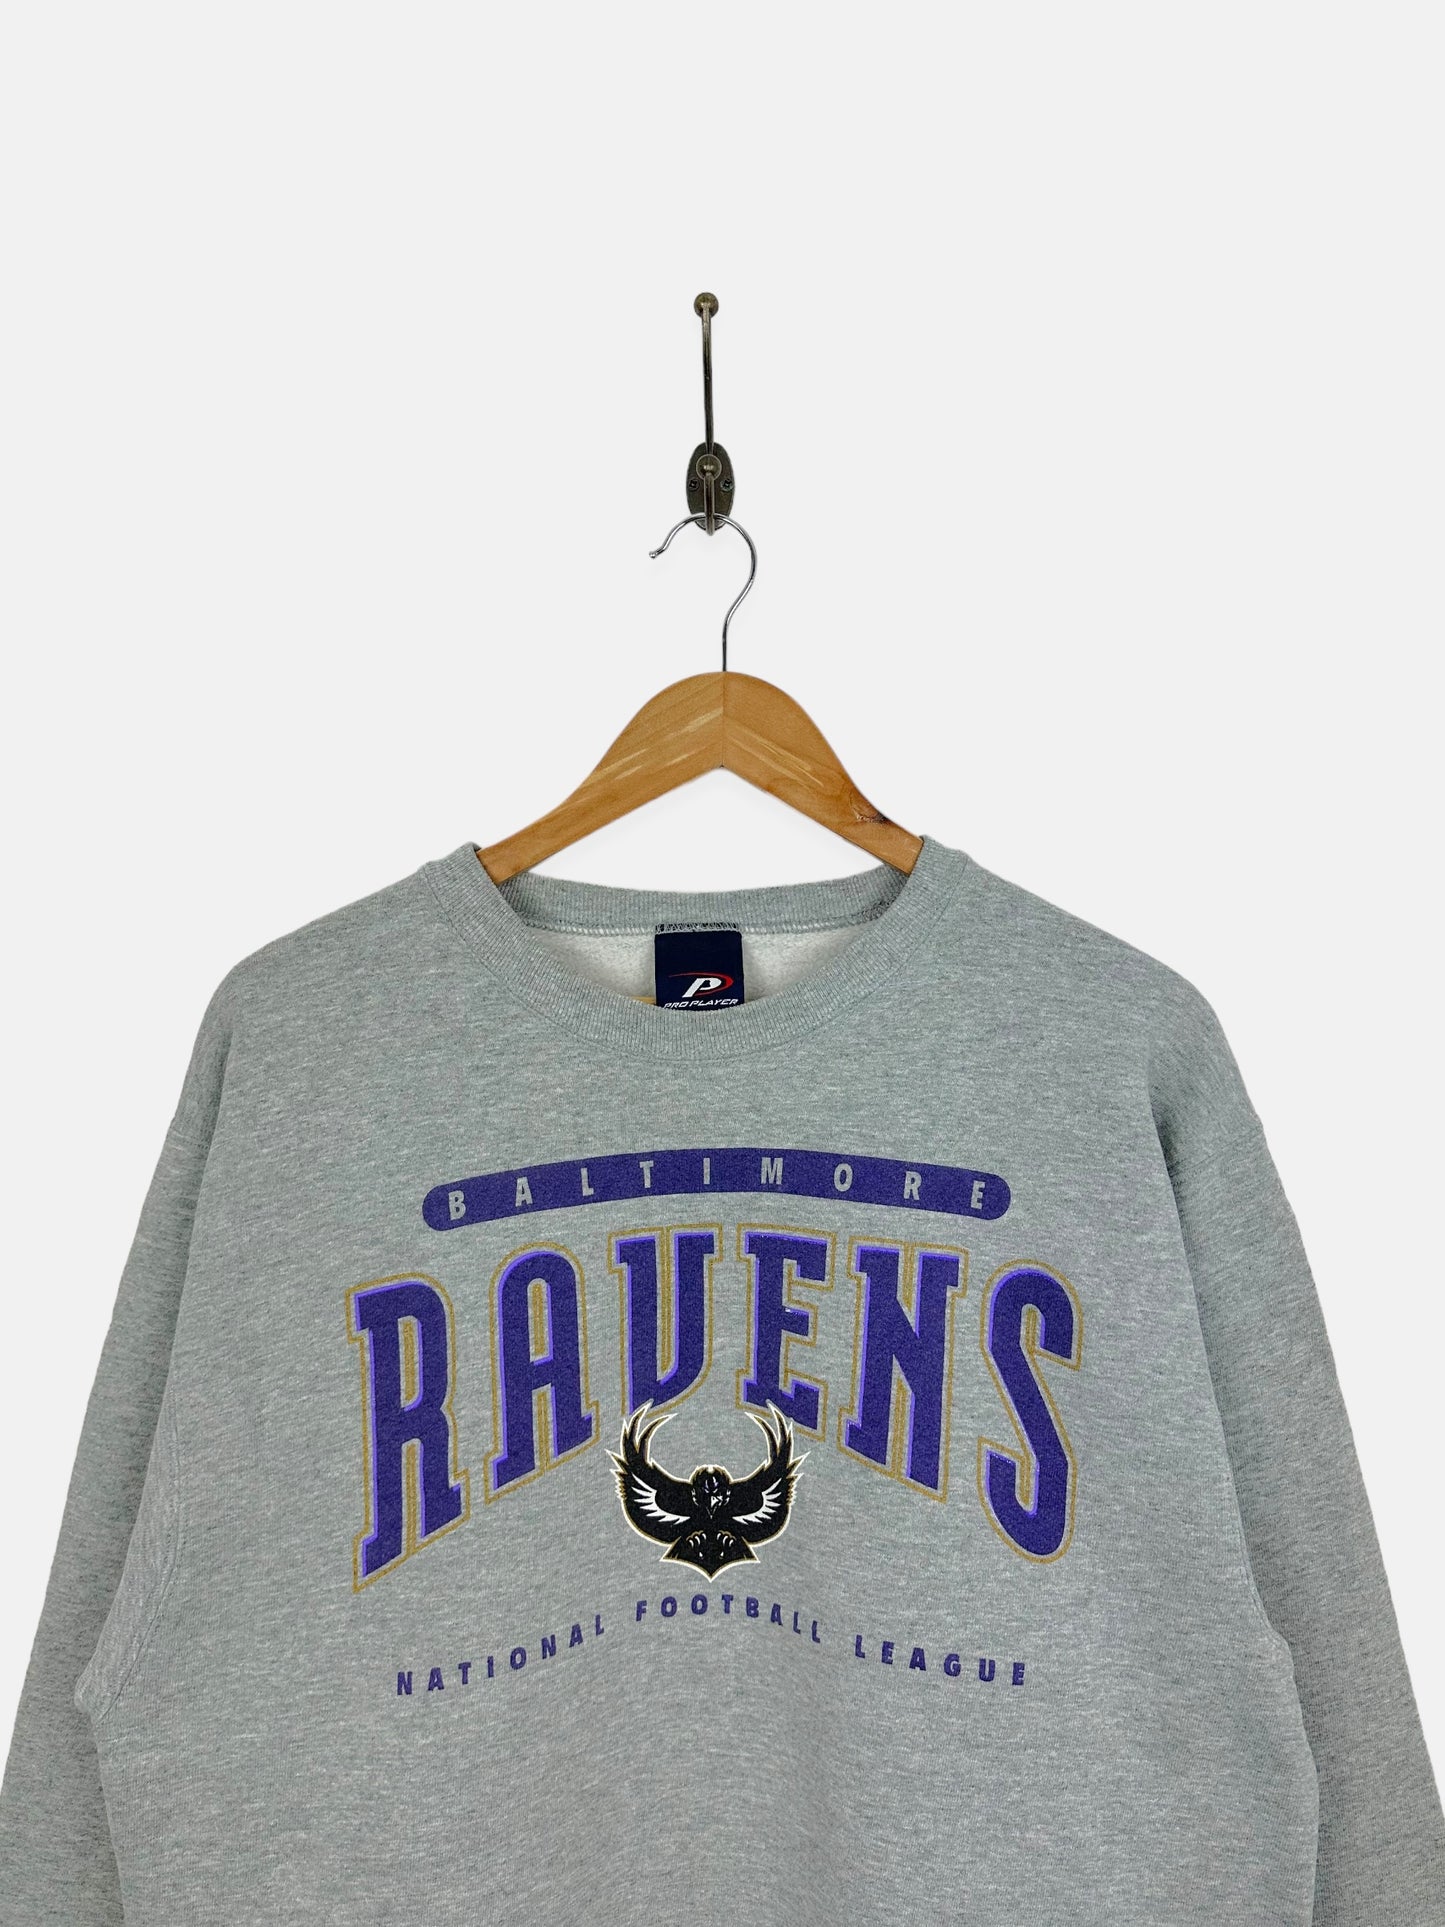 90's Baltimore Ravens NFL Vintage Sweatshirt Size 10-12